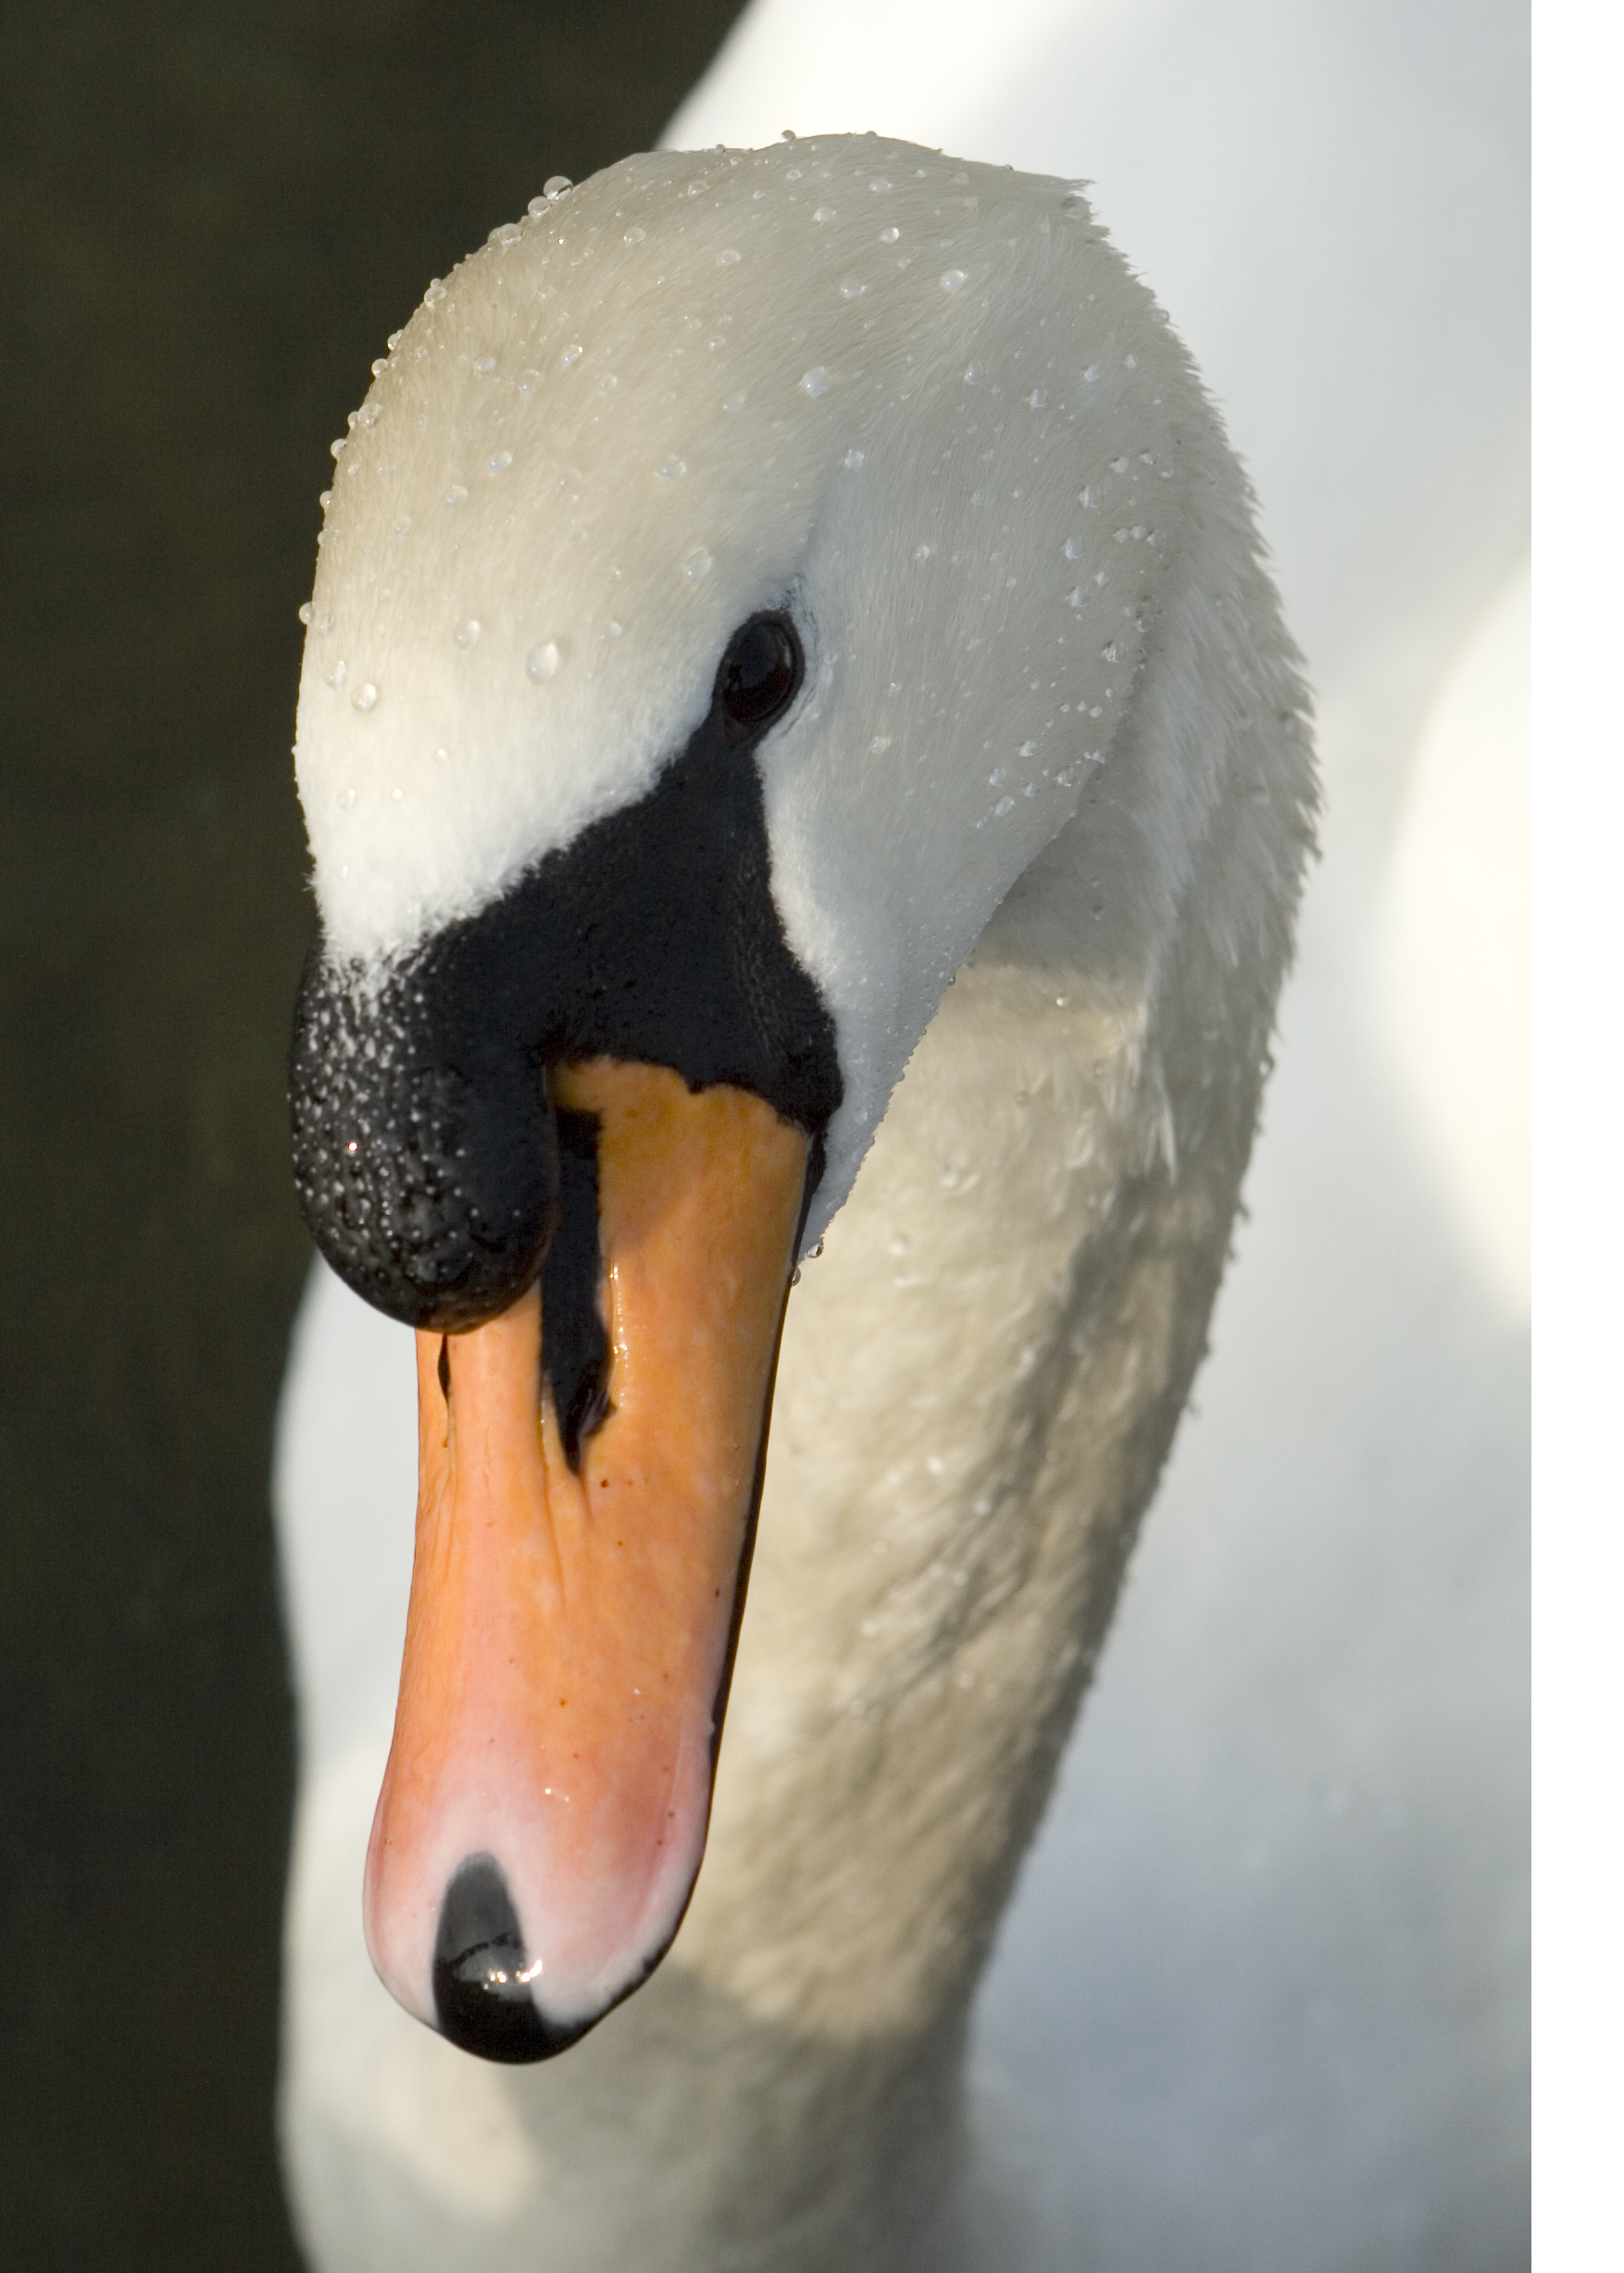 File:Head of swan, lake zurich.jpg - Wikimedia Commons